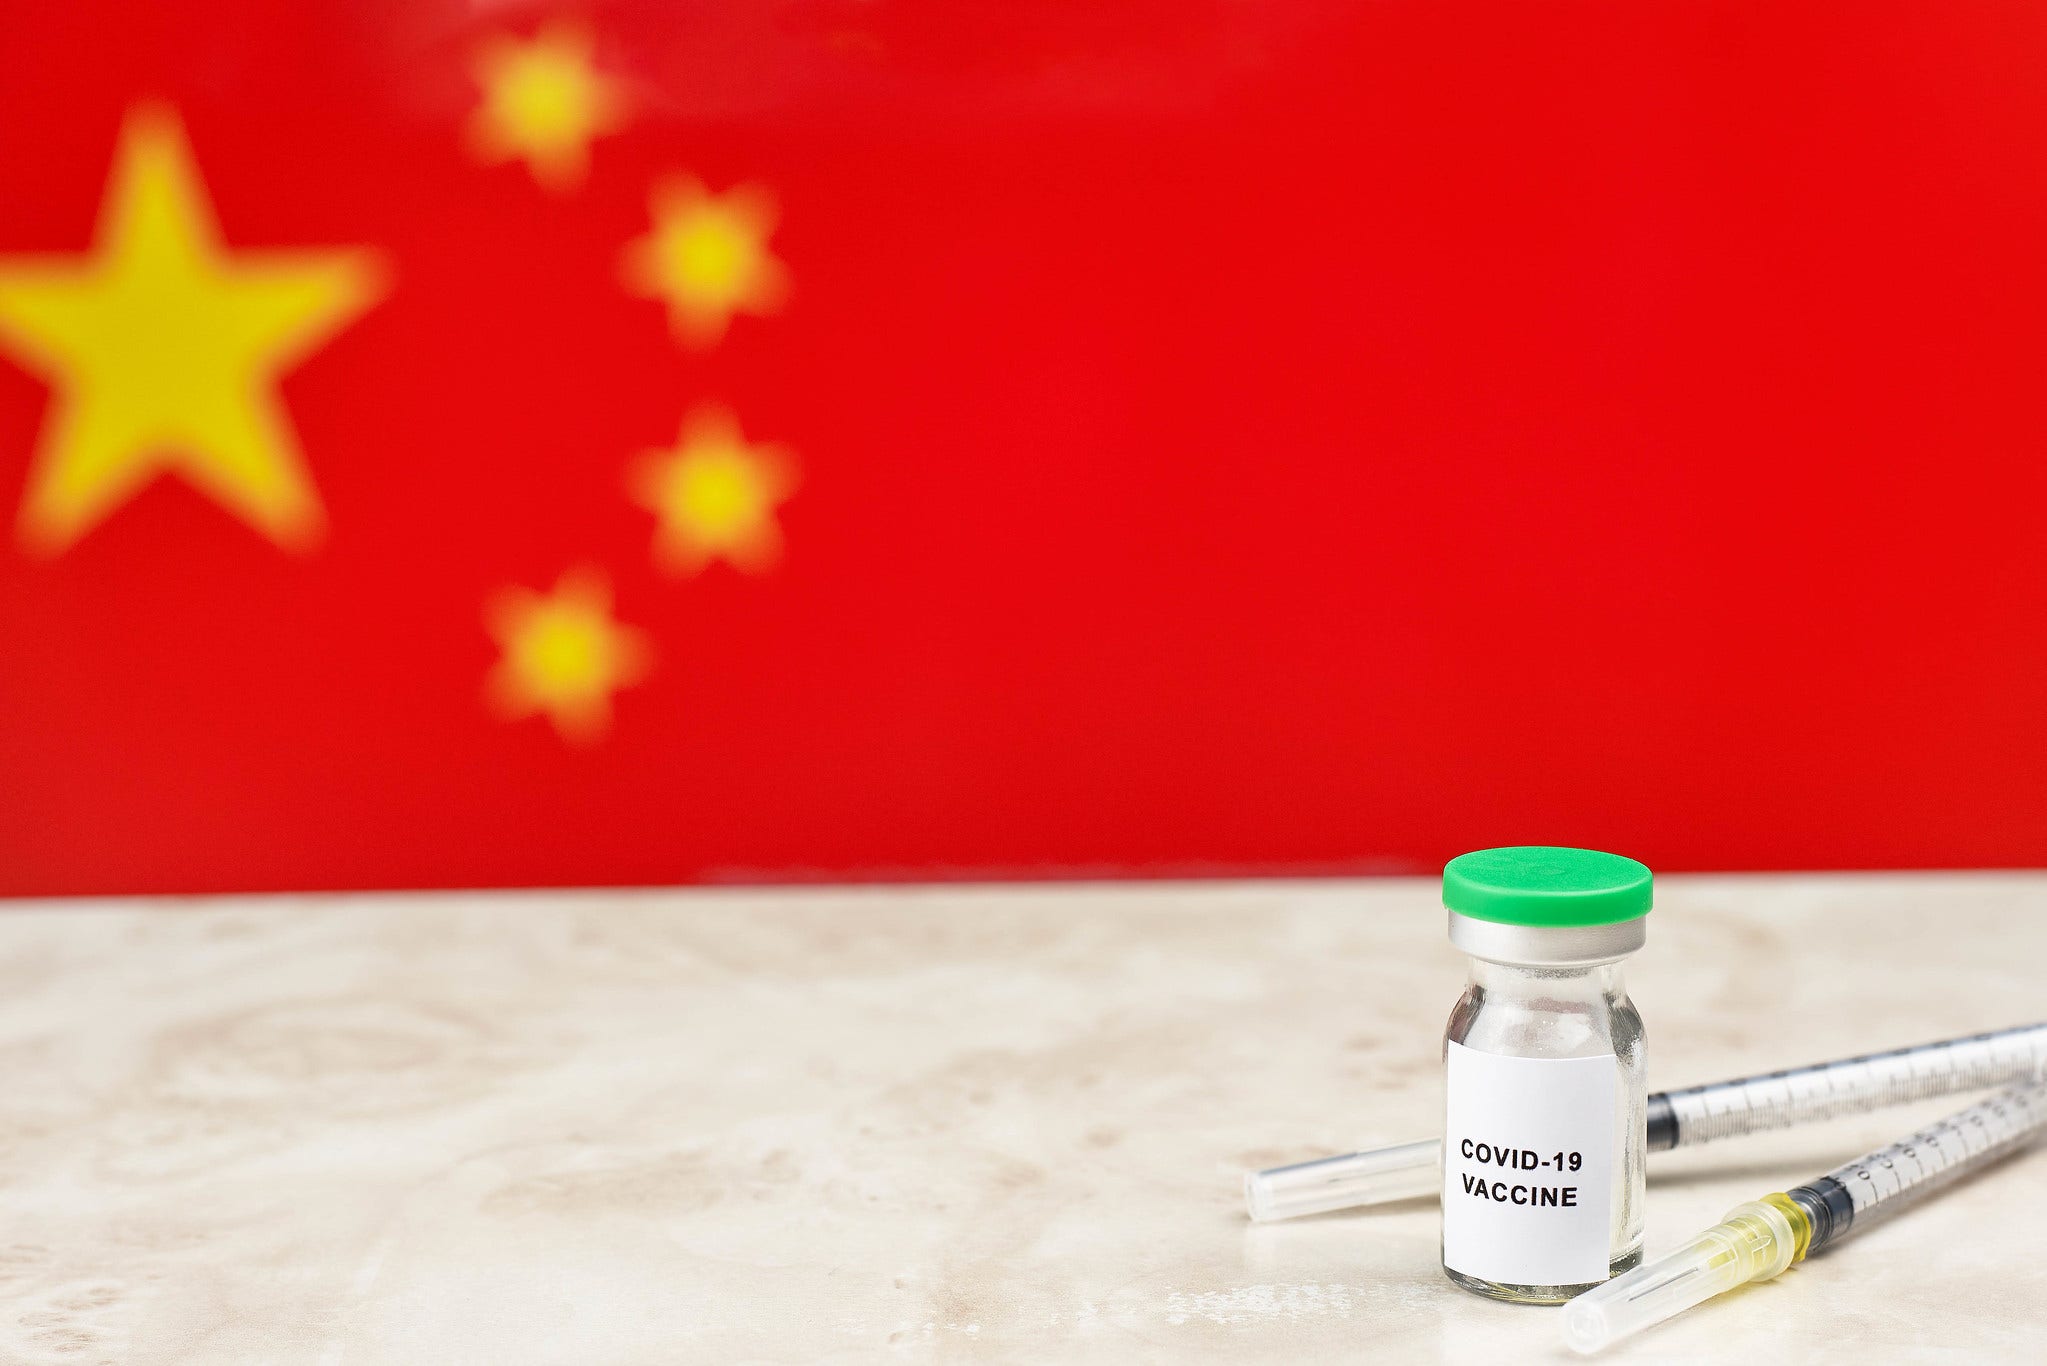 Jim Cramer Says China's Vaccines 'Don't Work' But Xi Won't Admit It